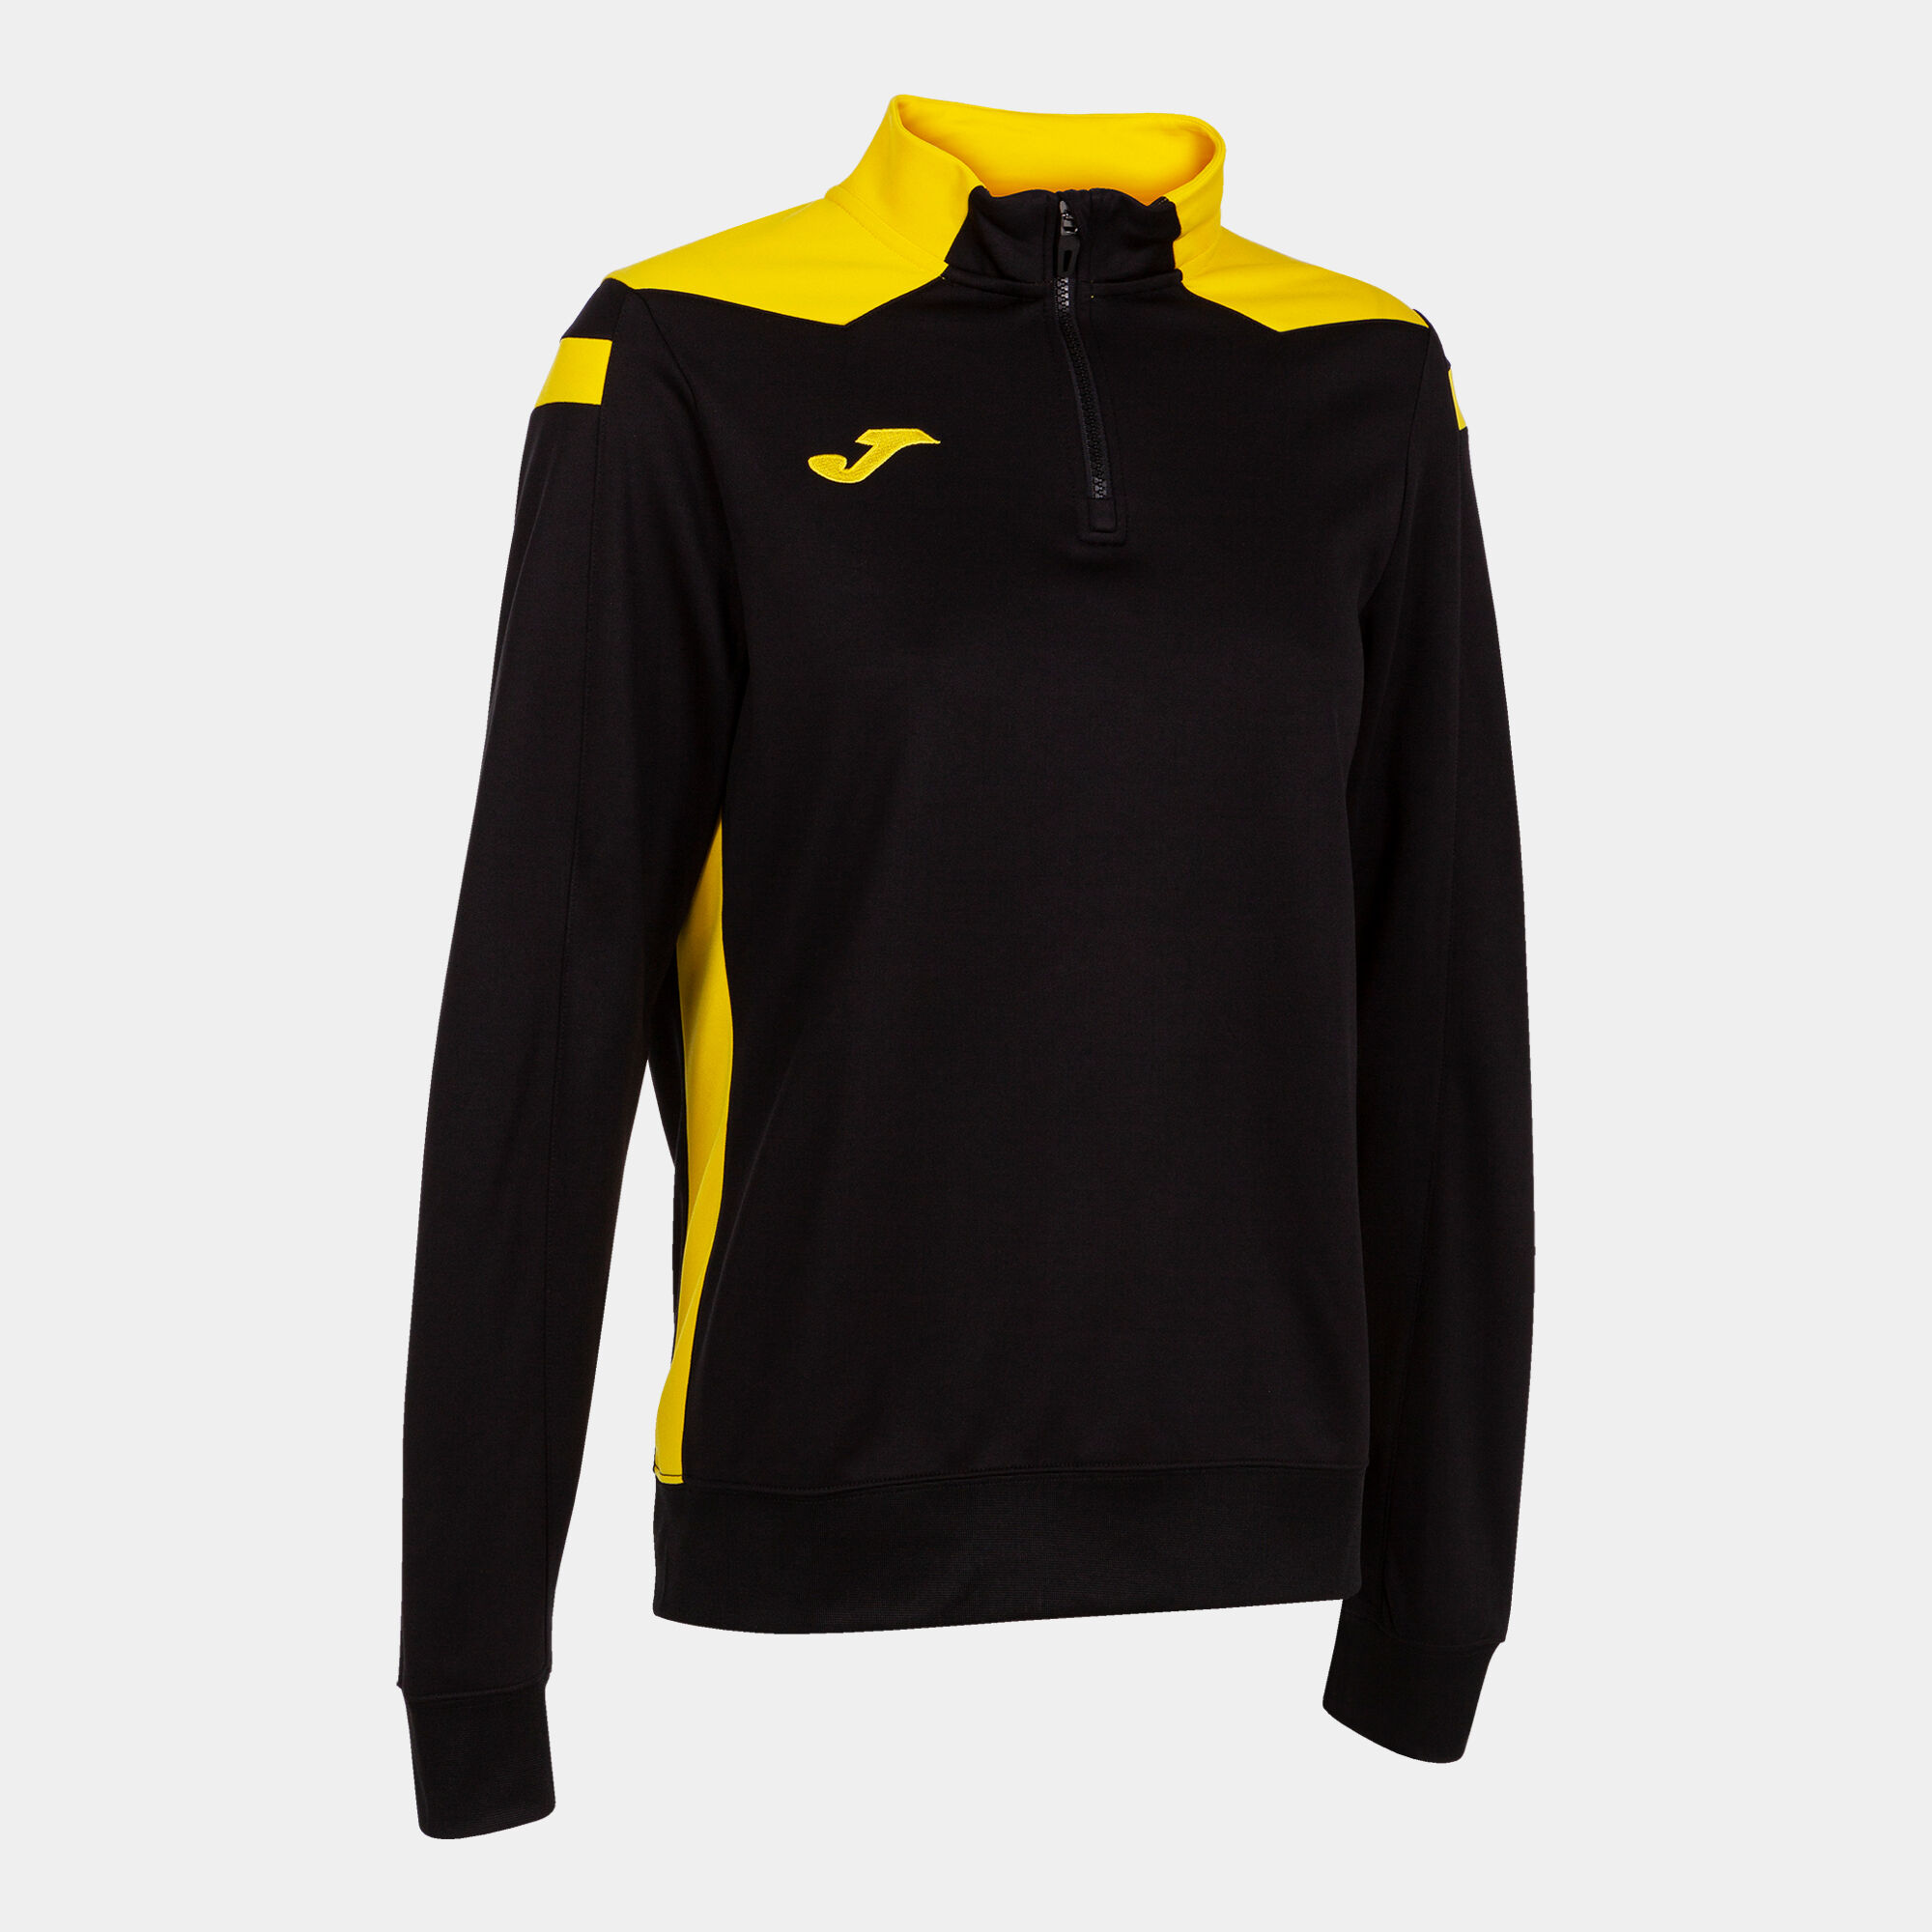 Sweat-shirt femme Championship VI noir jaune